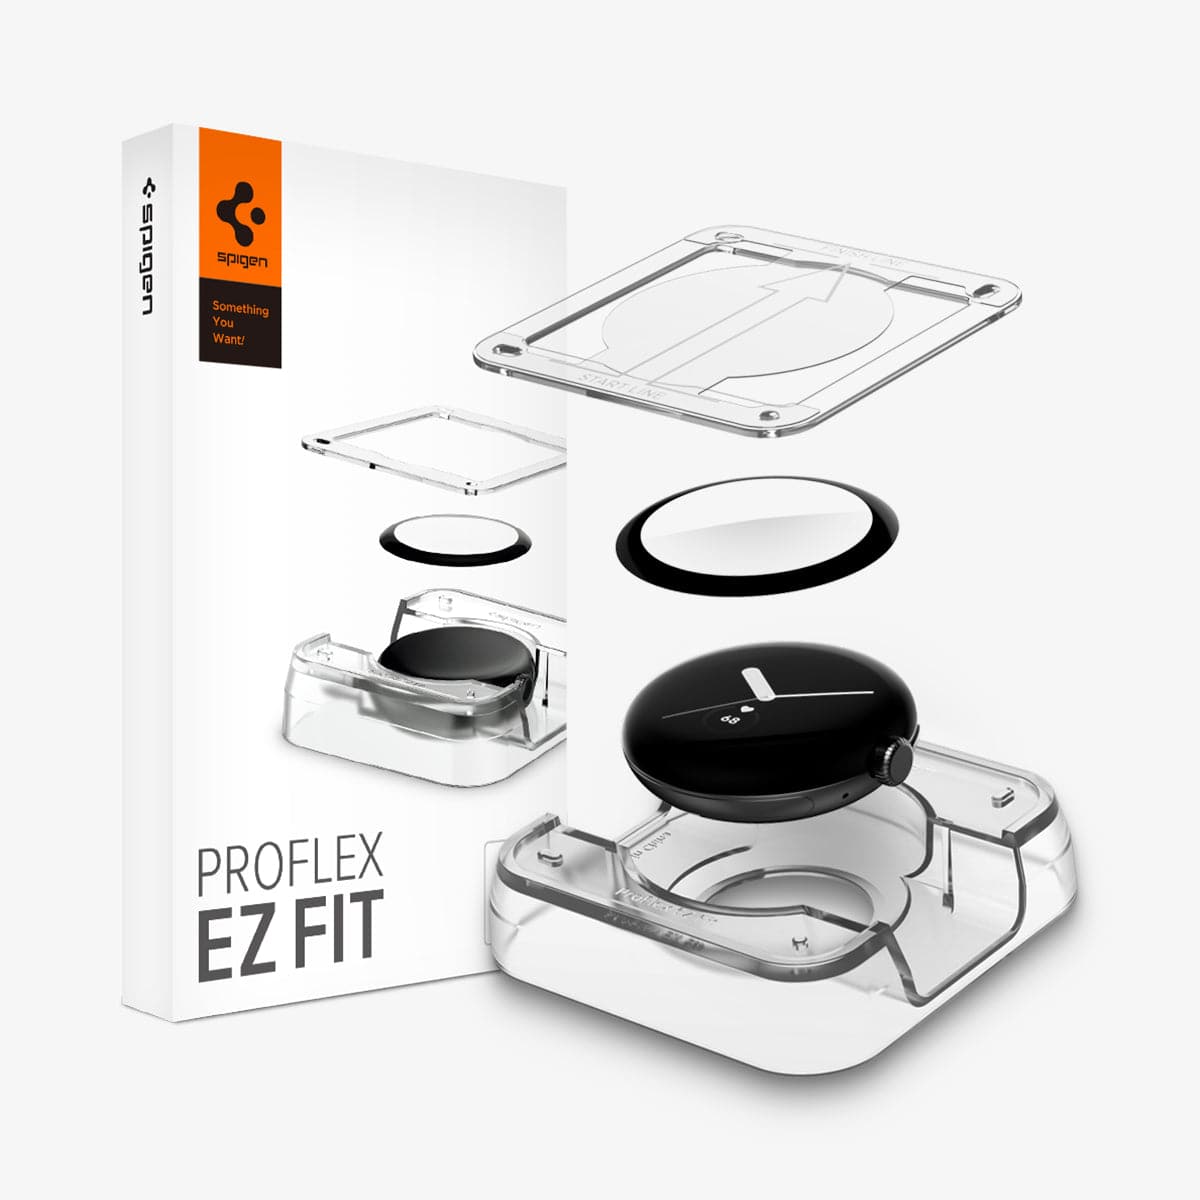 AFL05926 - Pixel Watch Screen Protector ProFlex EZ Fit showing the watch face, screen protector, ez fit tray and packaging